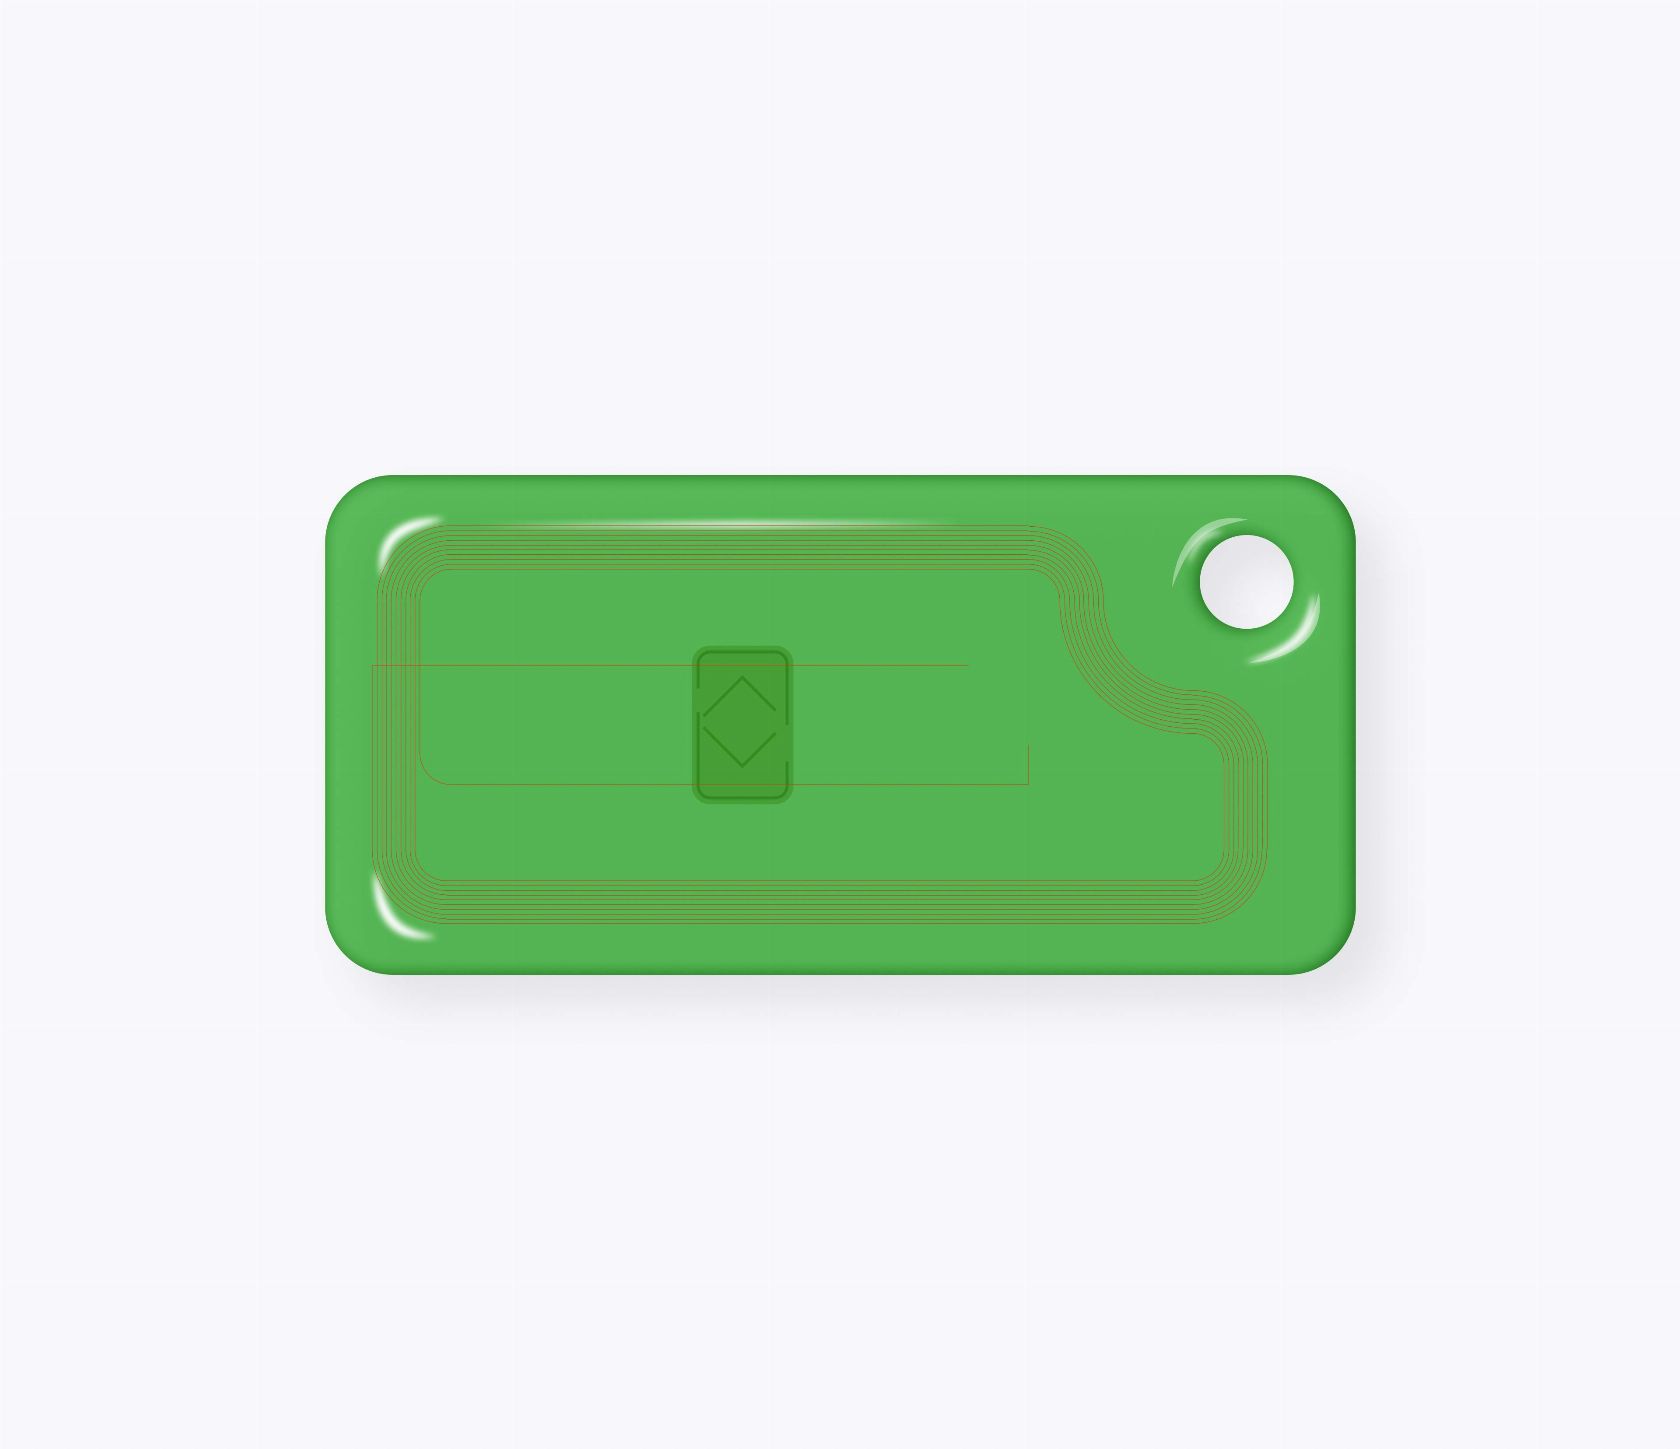 RFID-брелок NEOKEY® Air CARAMEL® (прямоугольной формы) MIFARE 1k 4b nUID прозрачный зеленый RFID-брелок NEOKEY® Caramel (прямоугольной формы) NXP MIFARE 1k 4b nUID, зеленый